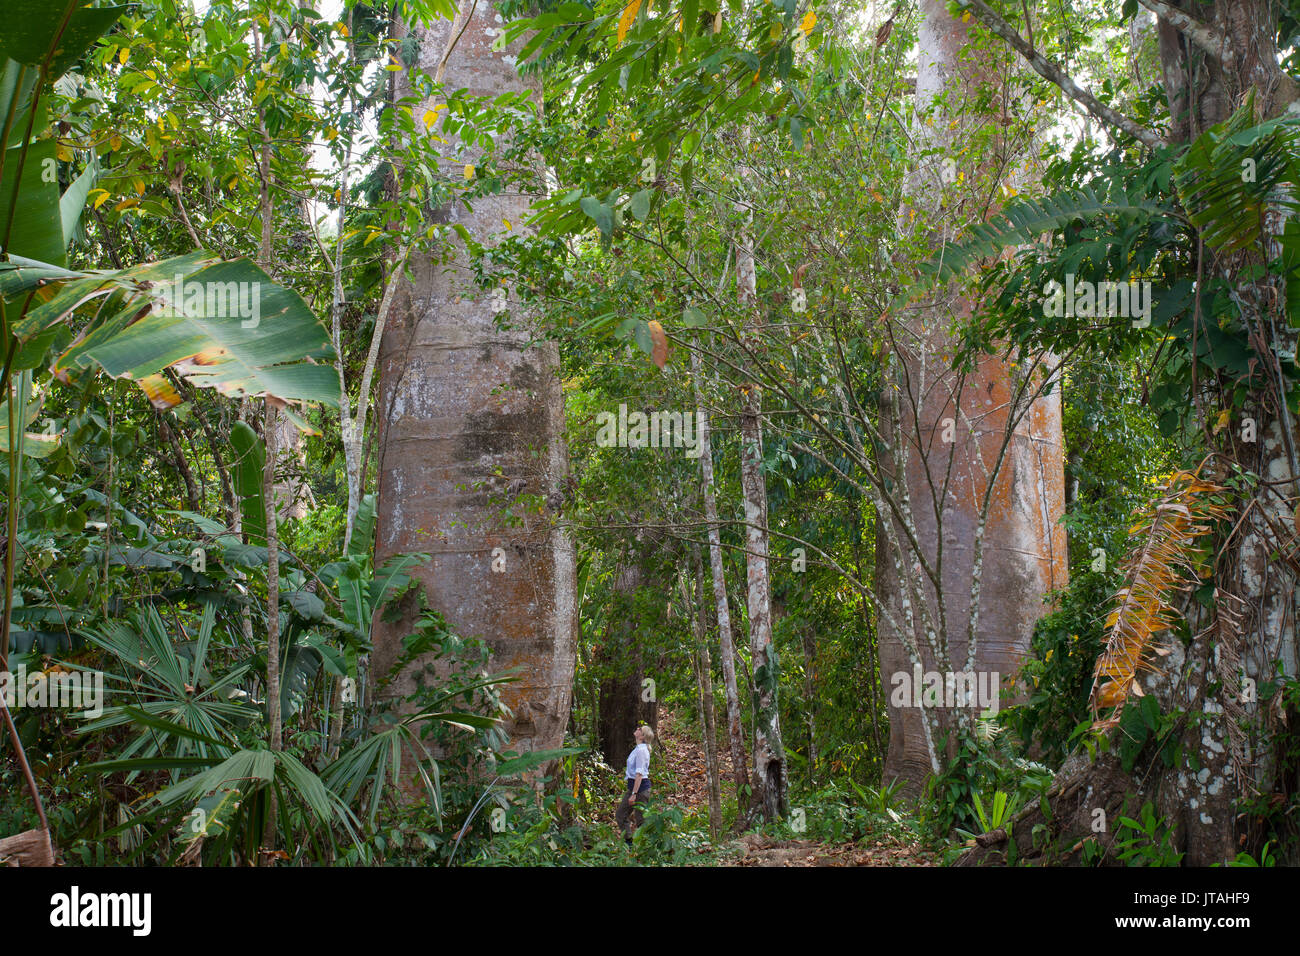 Kapok, Ceiba or Silk Cotton trees (Ceiba pentandra) with woman at base, Darien, Panama. Stock Photo